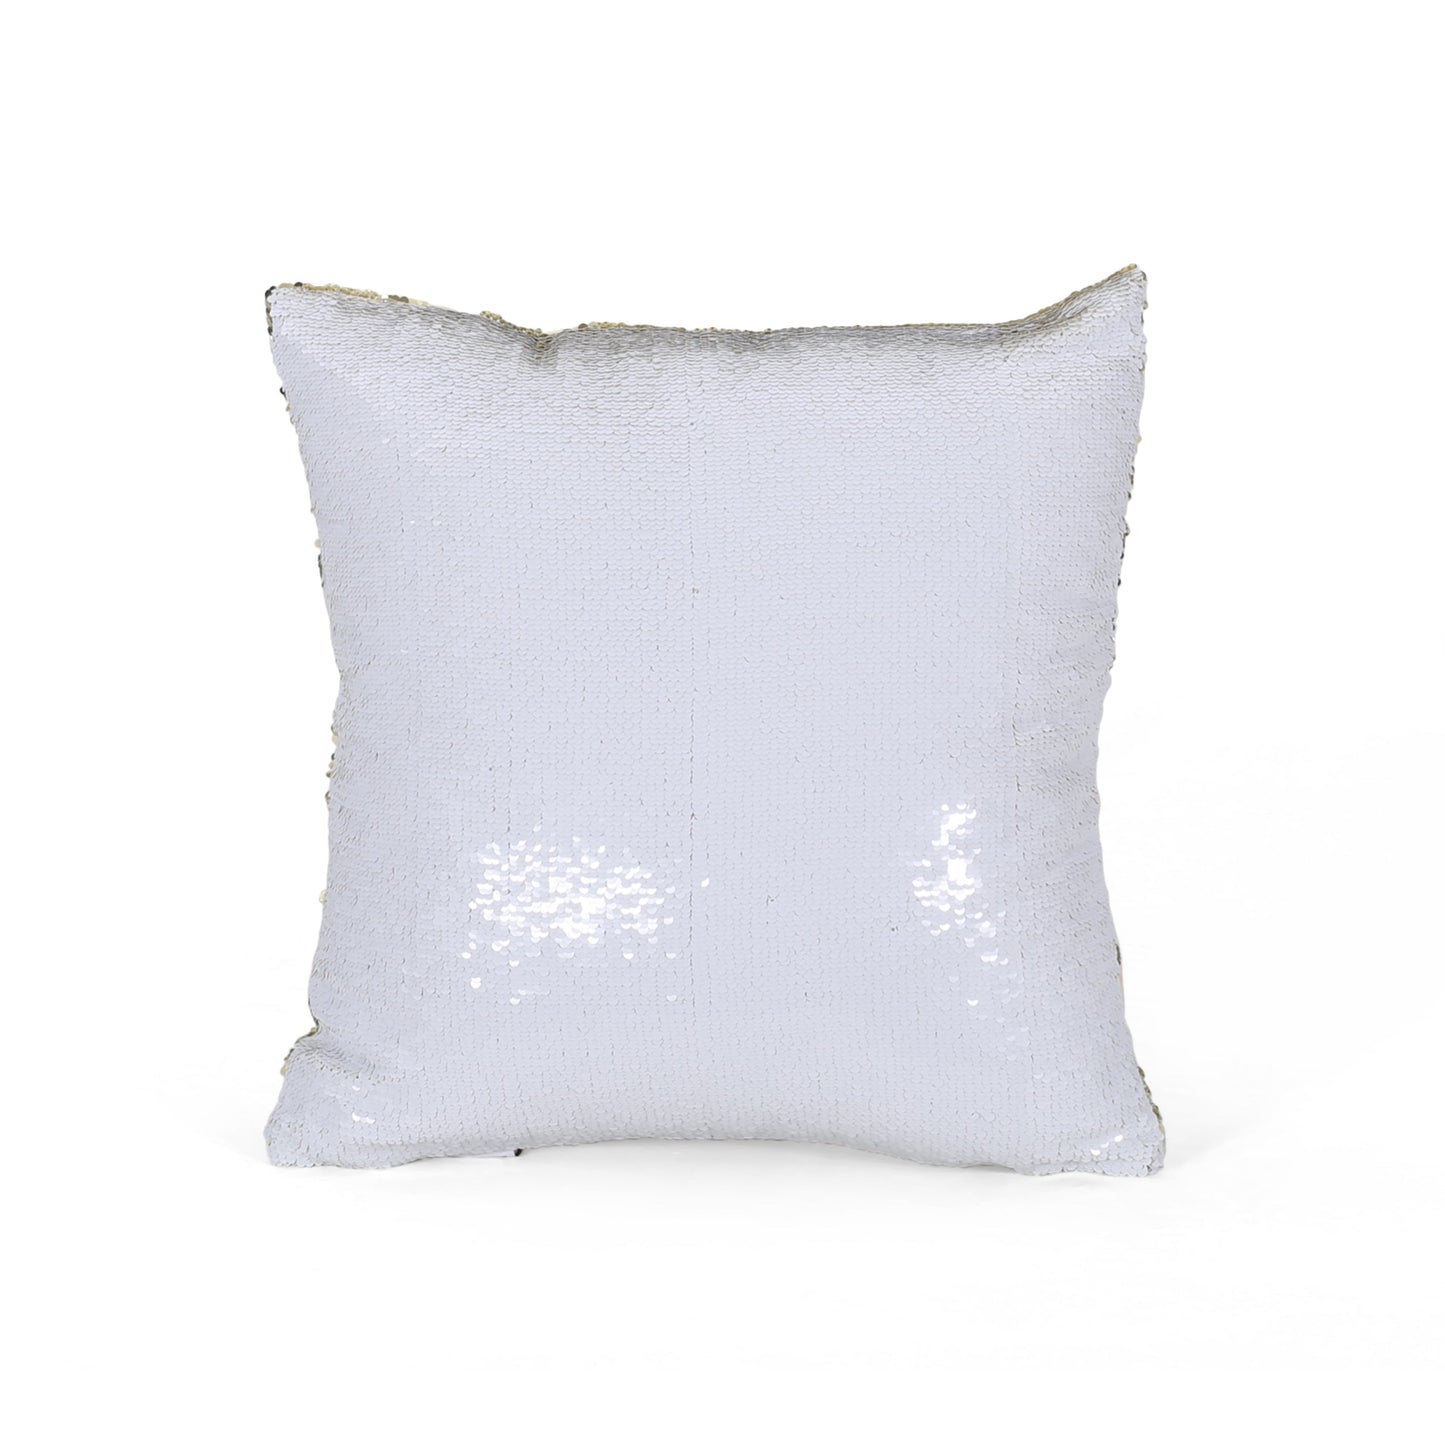 DST Keepsake Sequin Pillow | FREE SHIPPING